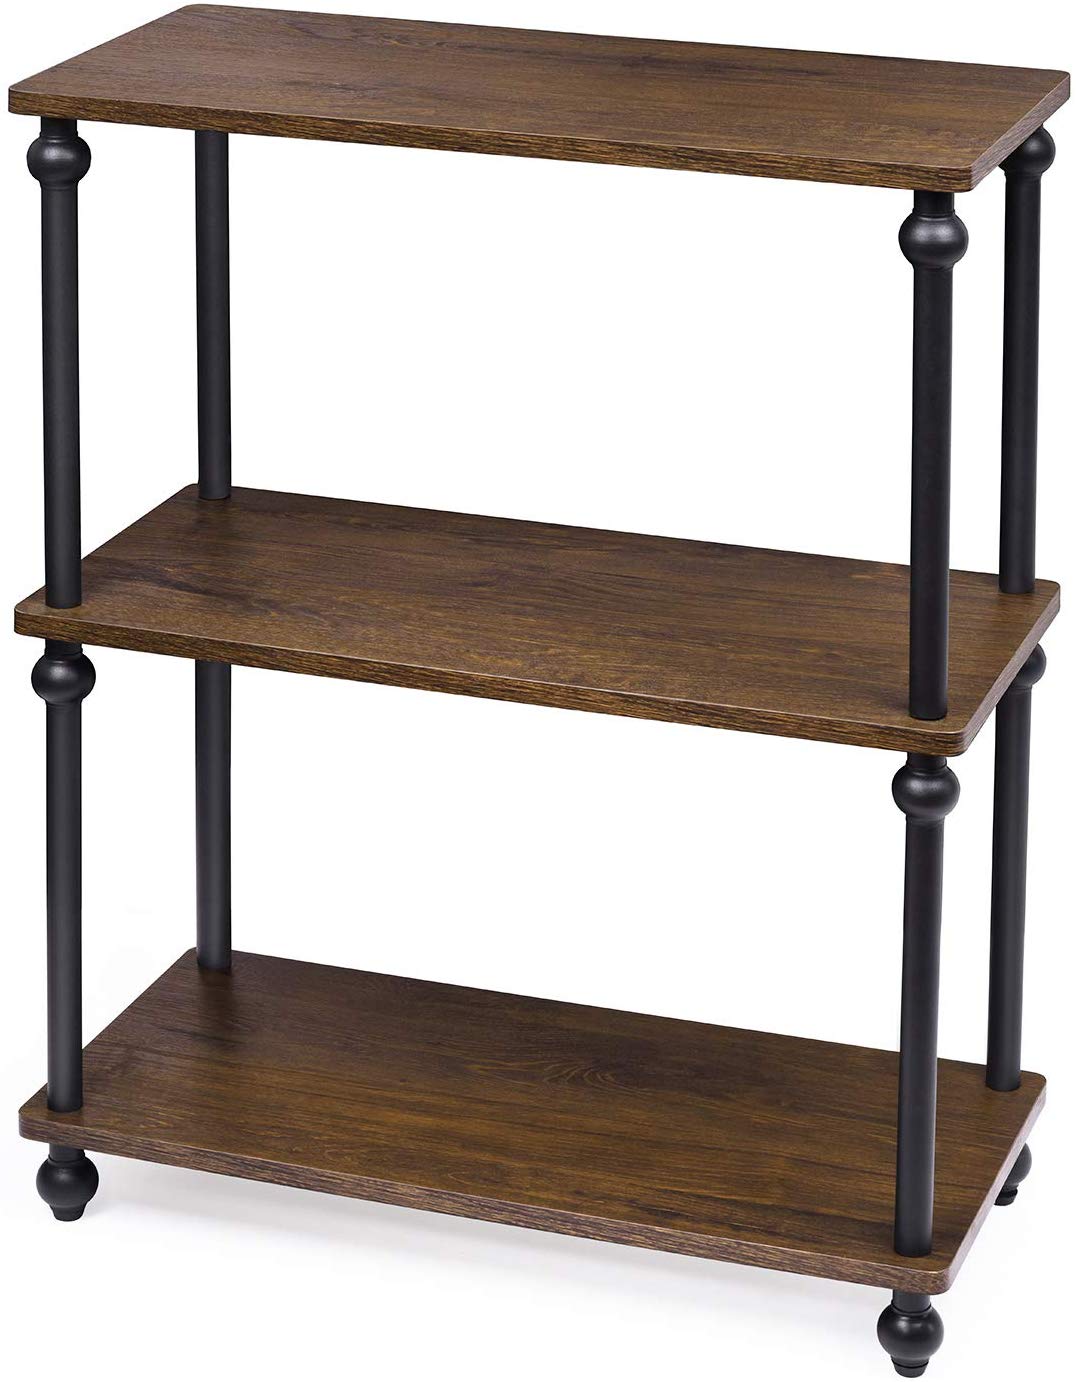 Industrial Small Bookshelf, 3-Tier Multipurpose Storage Rack Shelves for Living Room, Bedroom, Kitchen, Dark Walnut